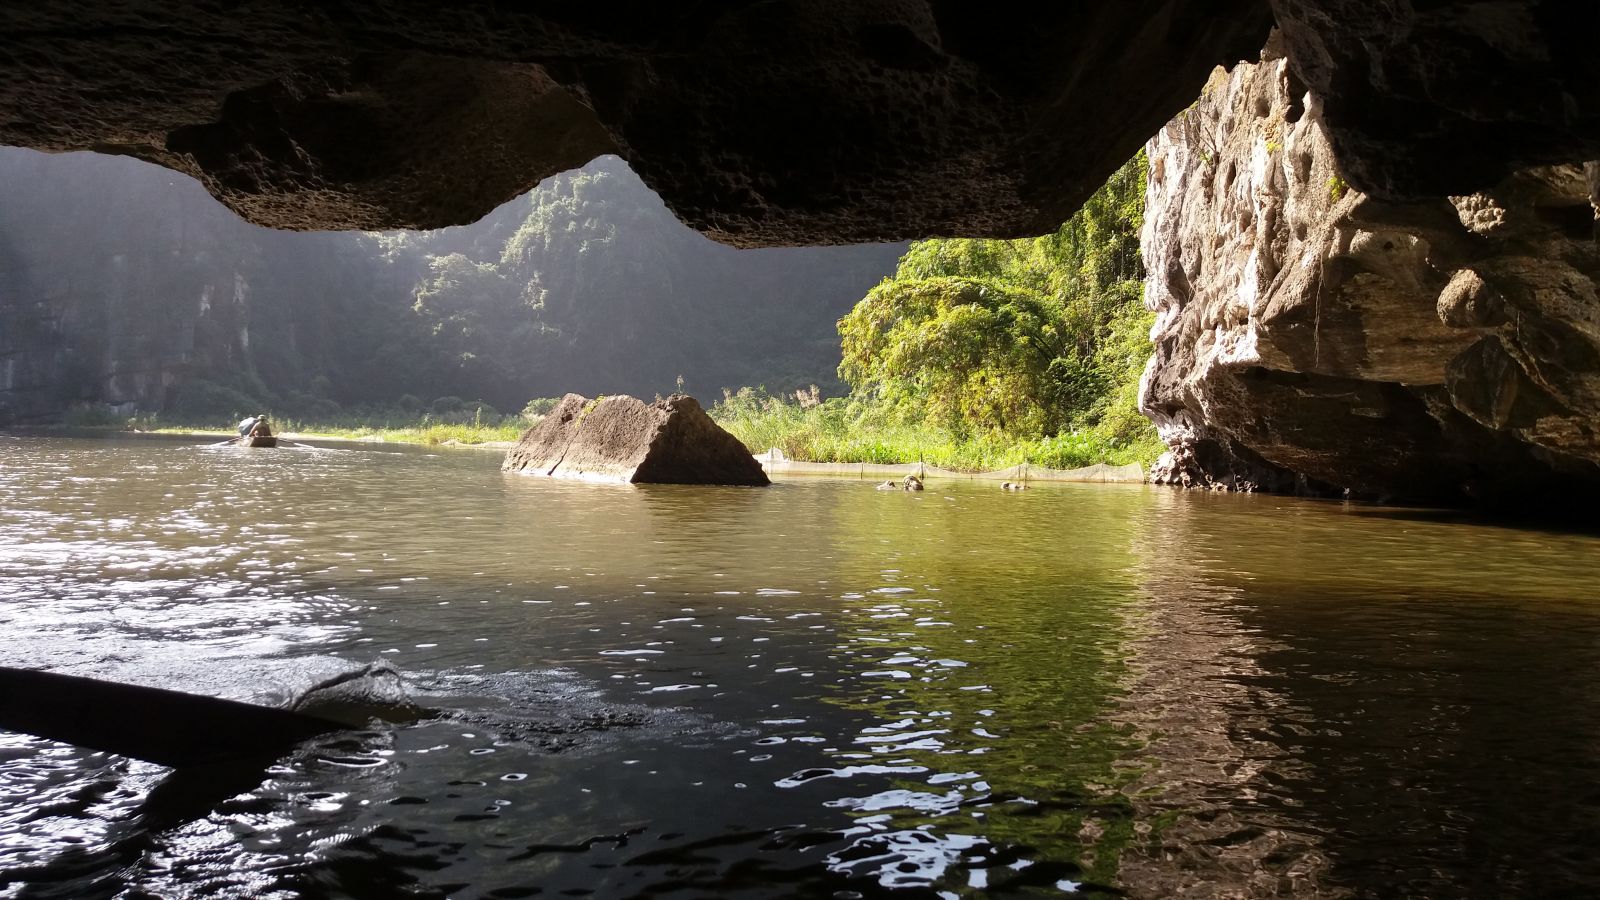 Cave in Van Long